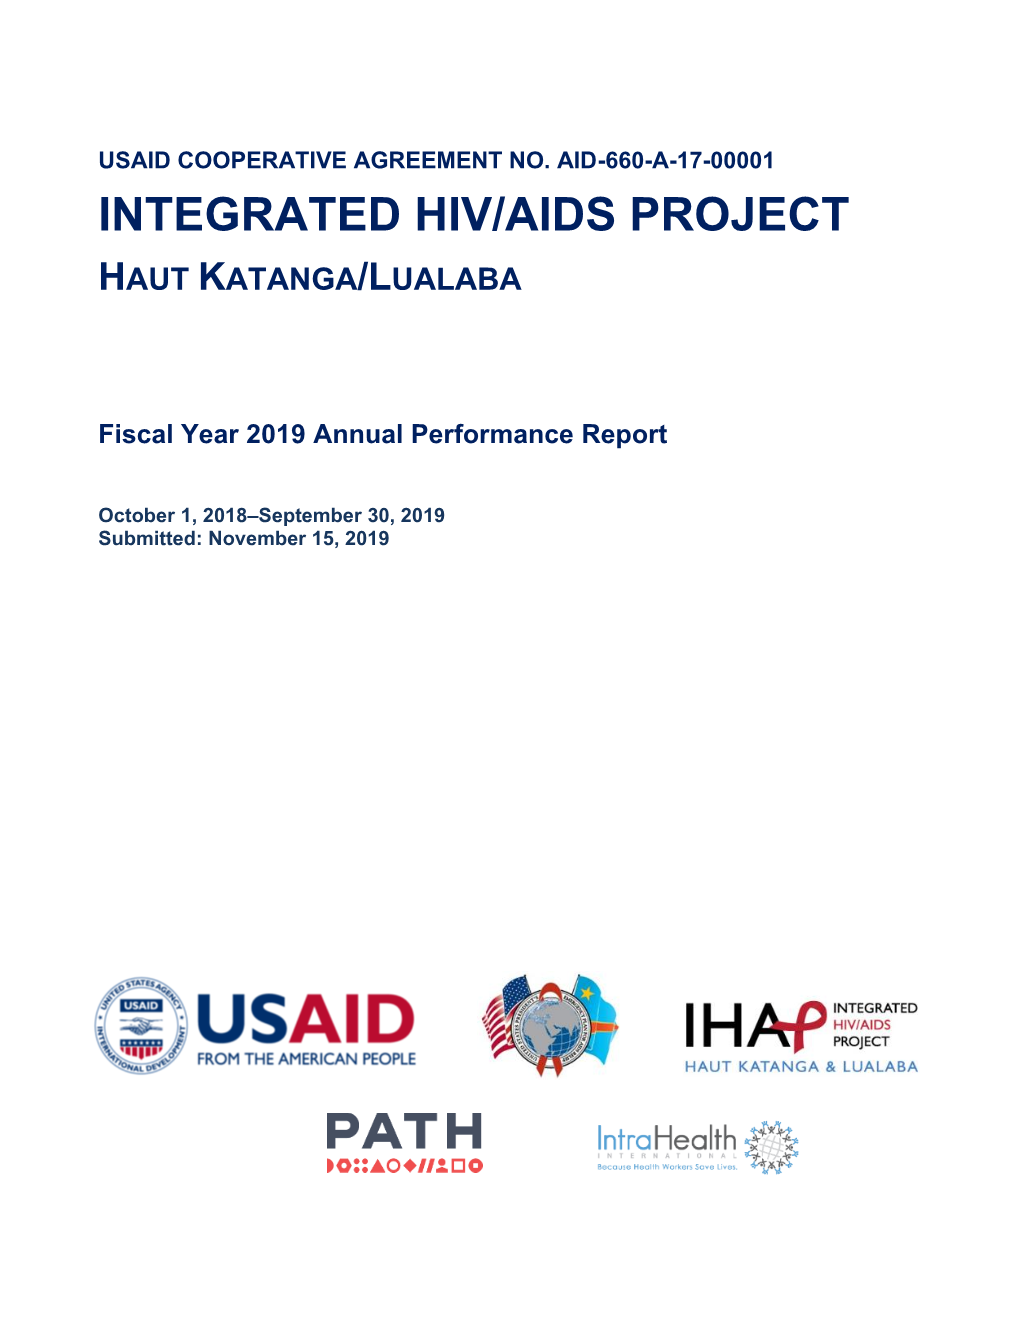 Integrated Hiv/Aids Project Haut Katanga/Lualaba